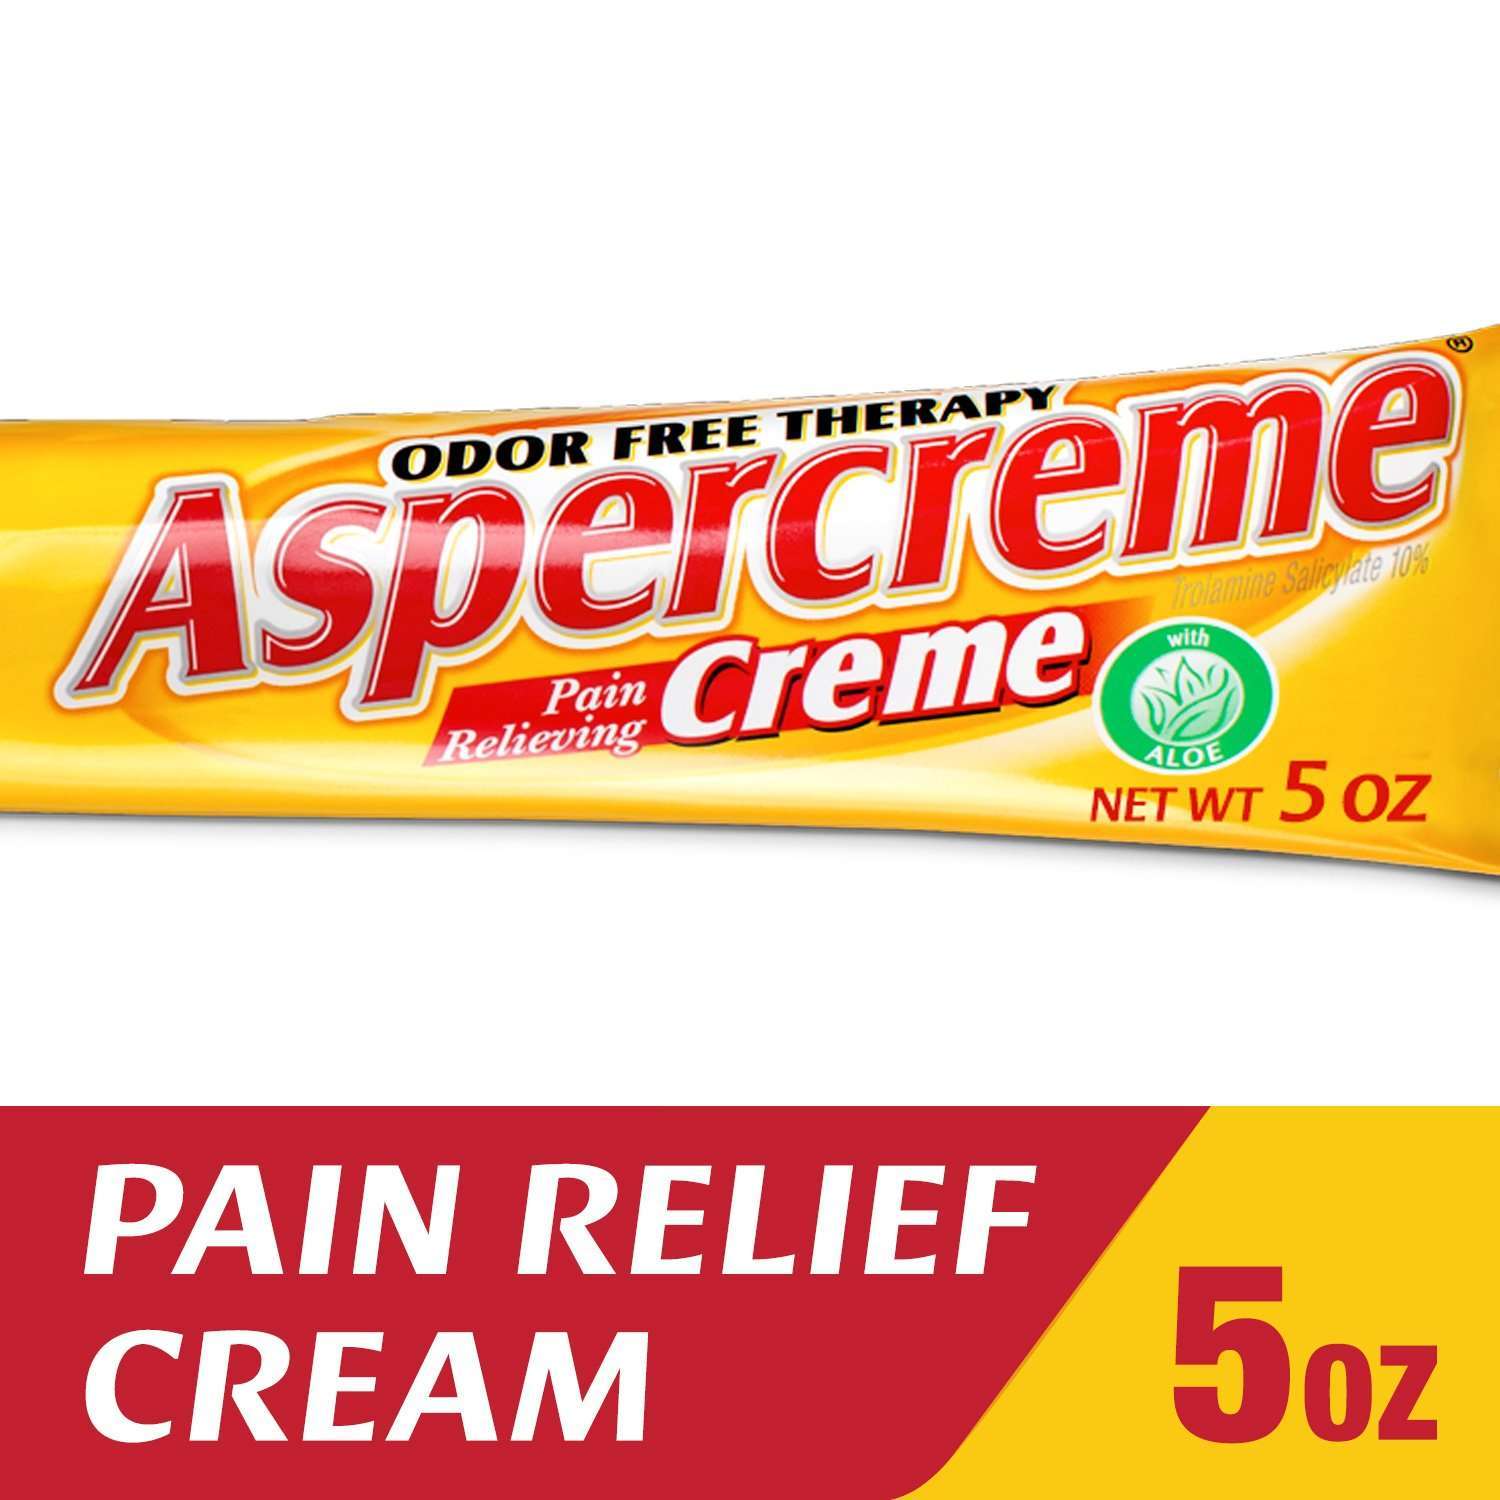 Aspercreme Pain Relieving Creme (5 Oz), Odor Free ...